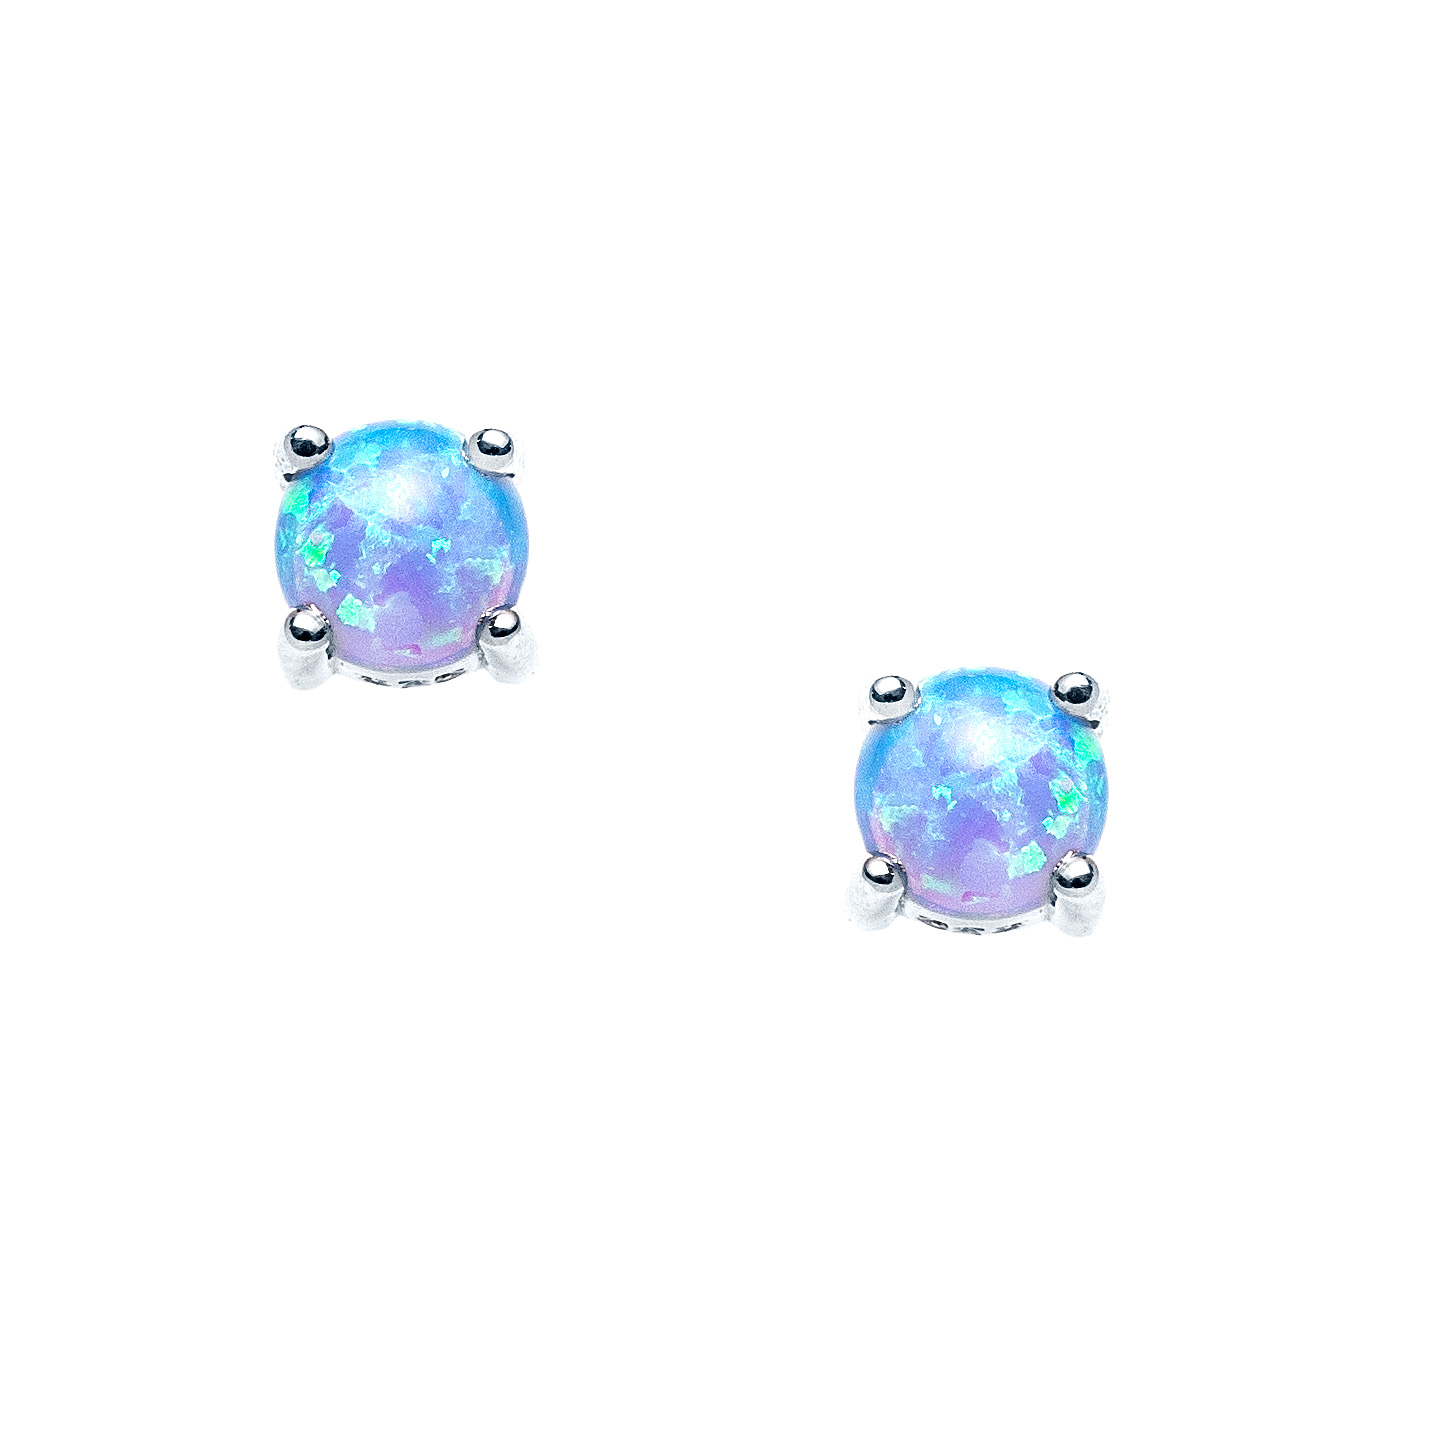 Fire Opal Gemstone Earrings with Sterling Silver Posts